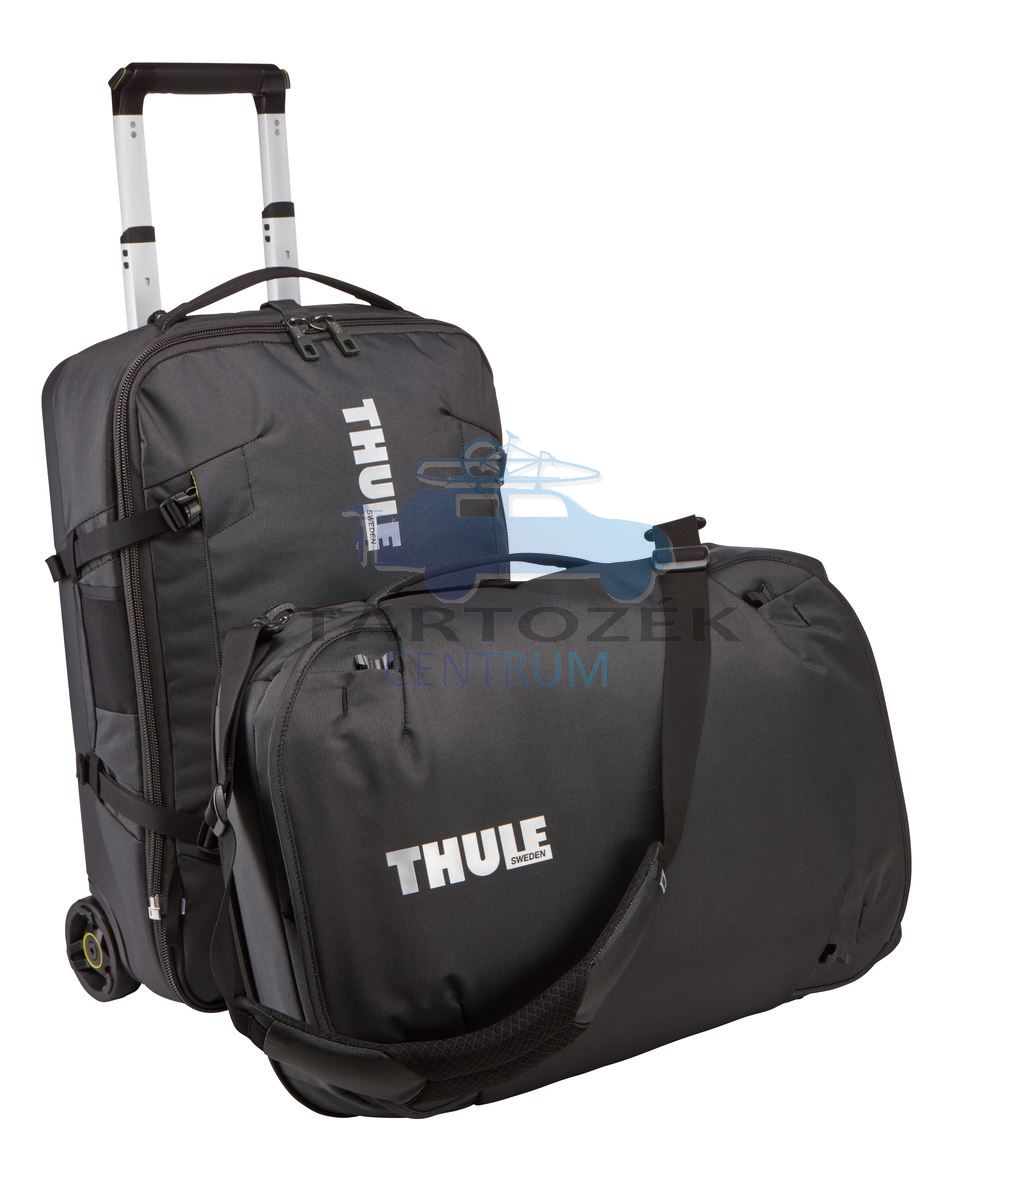 Thule Subterra 3204027 56L gurulós bőrönd, fekete